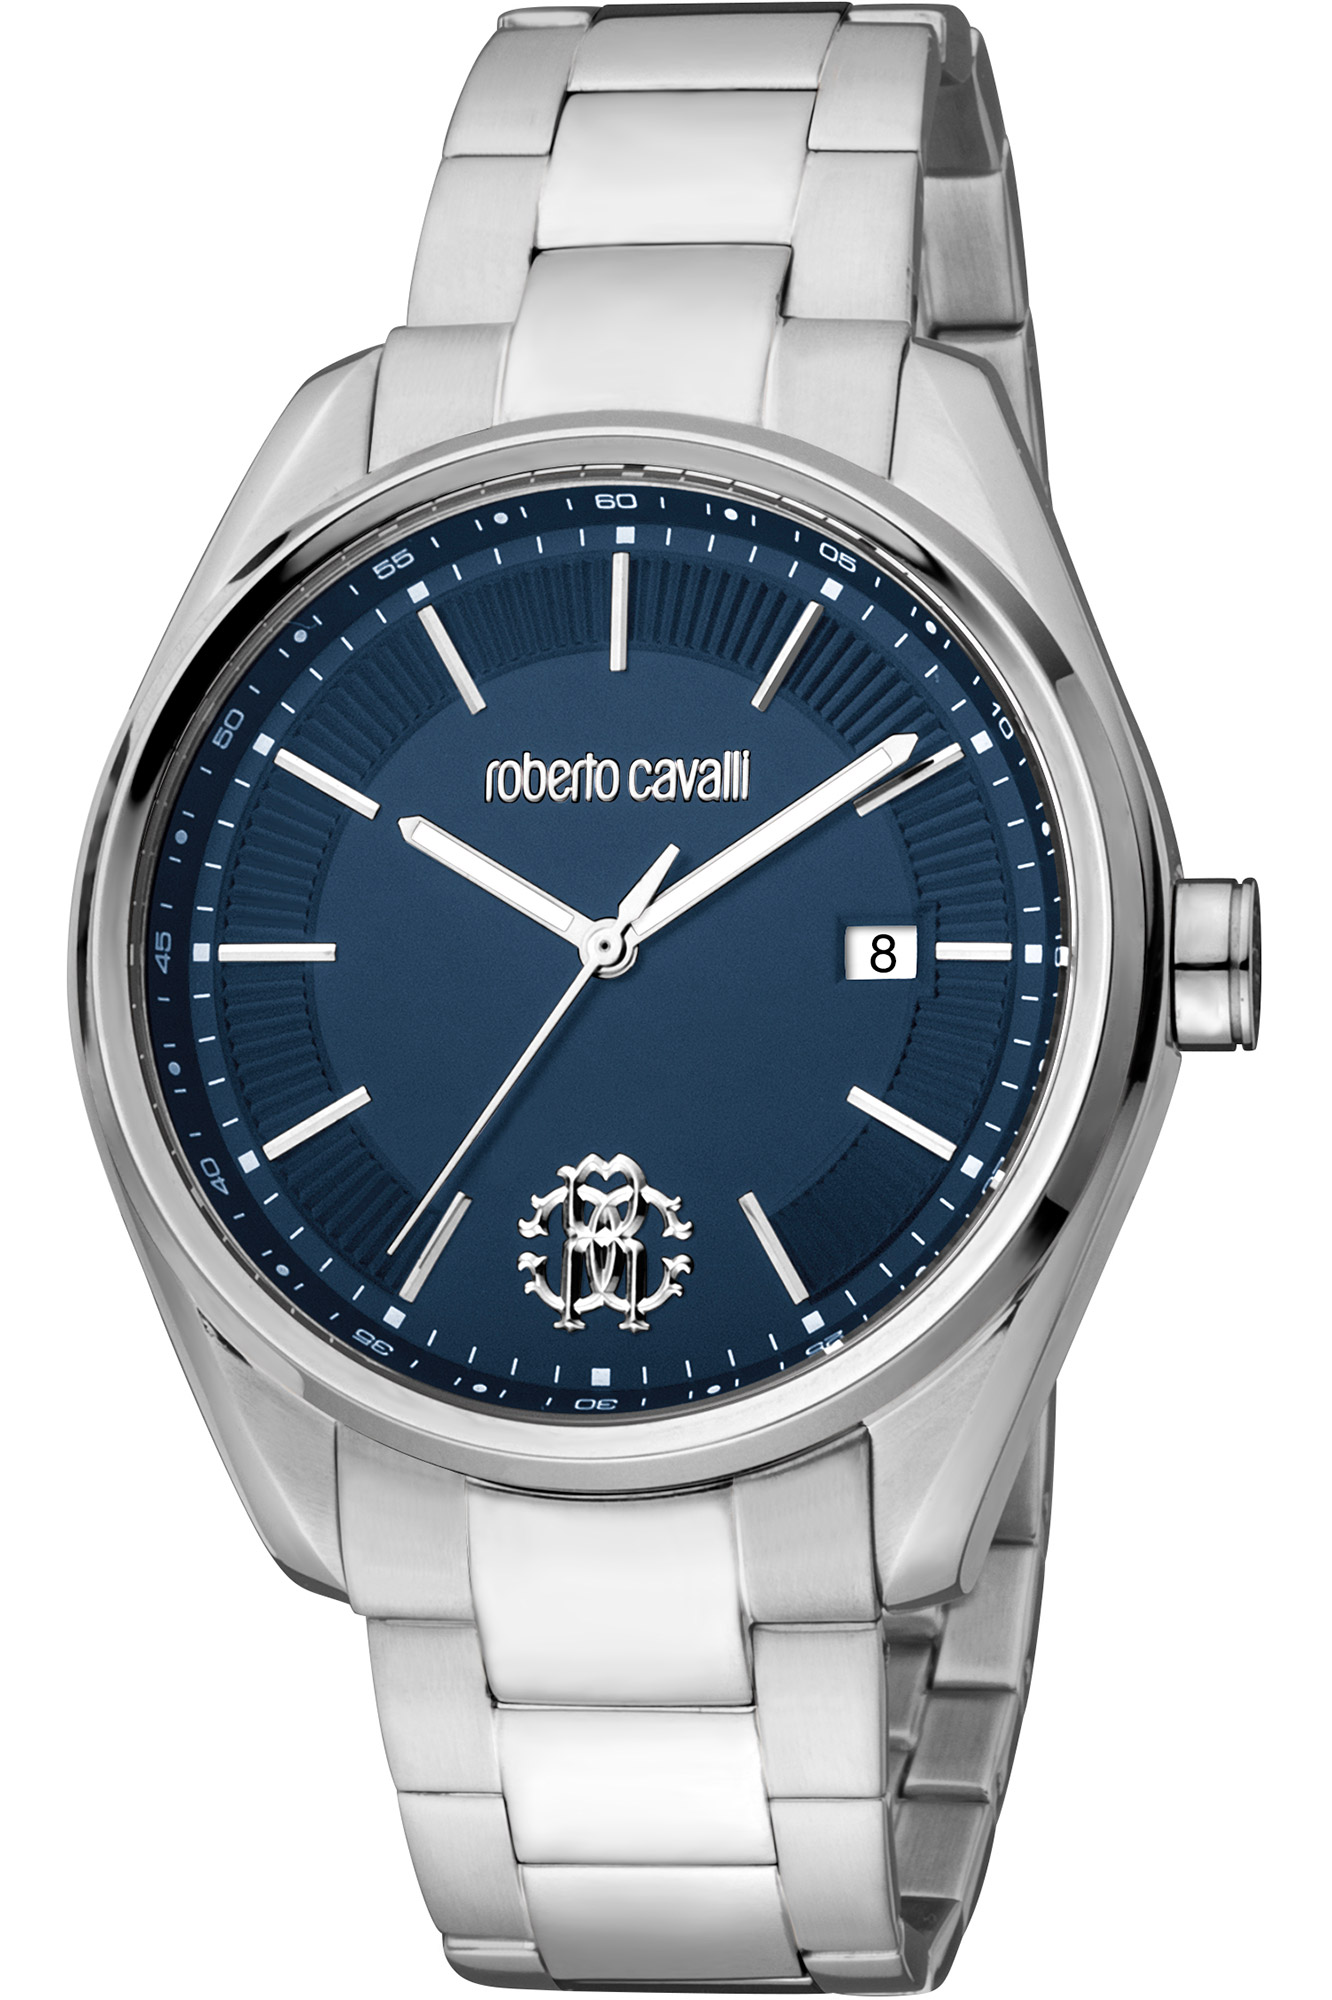 Reloj Roberto Cavalli rc5g012m0065